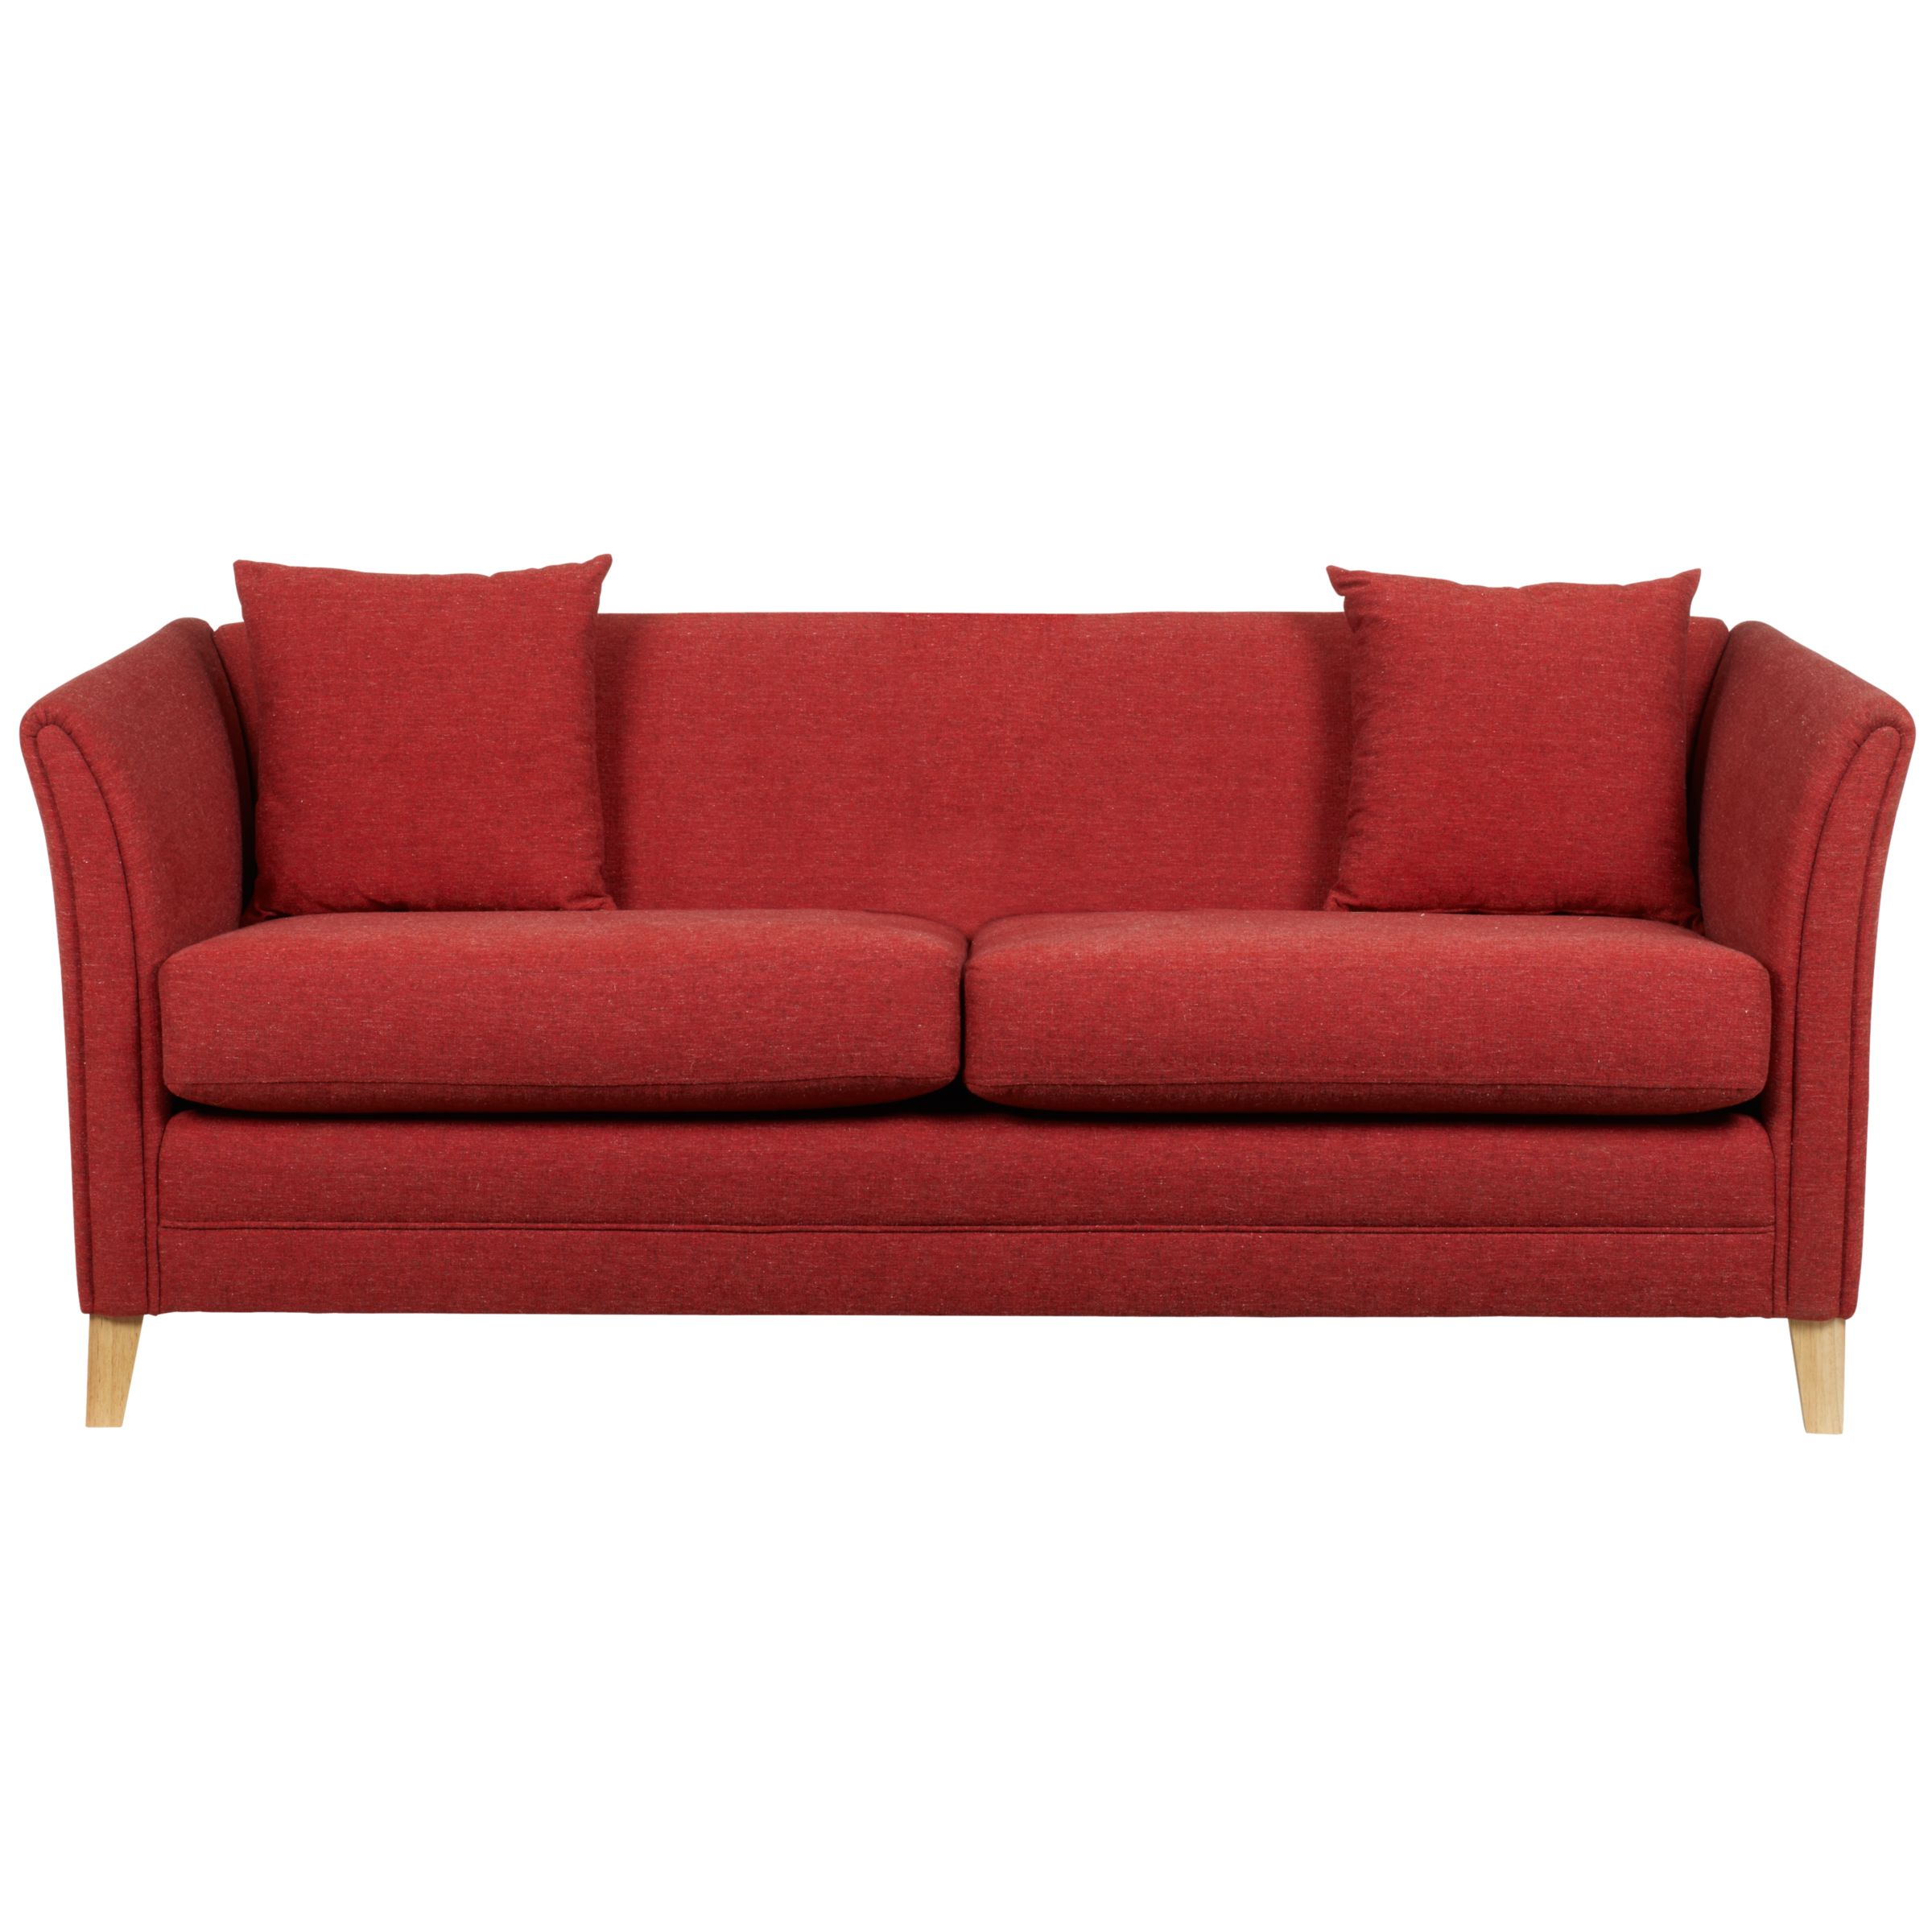 John Lewis Maja Medium Sofa, Red at John Lewis